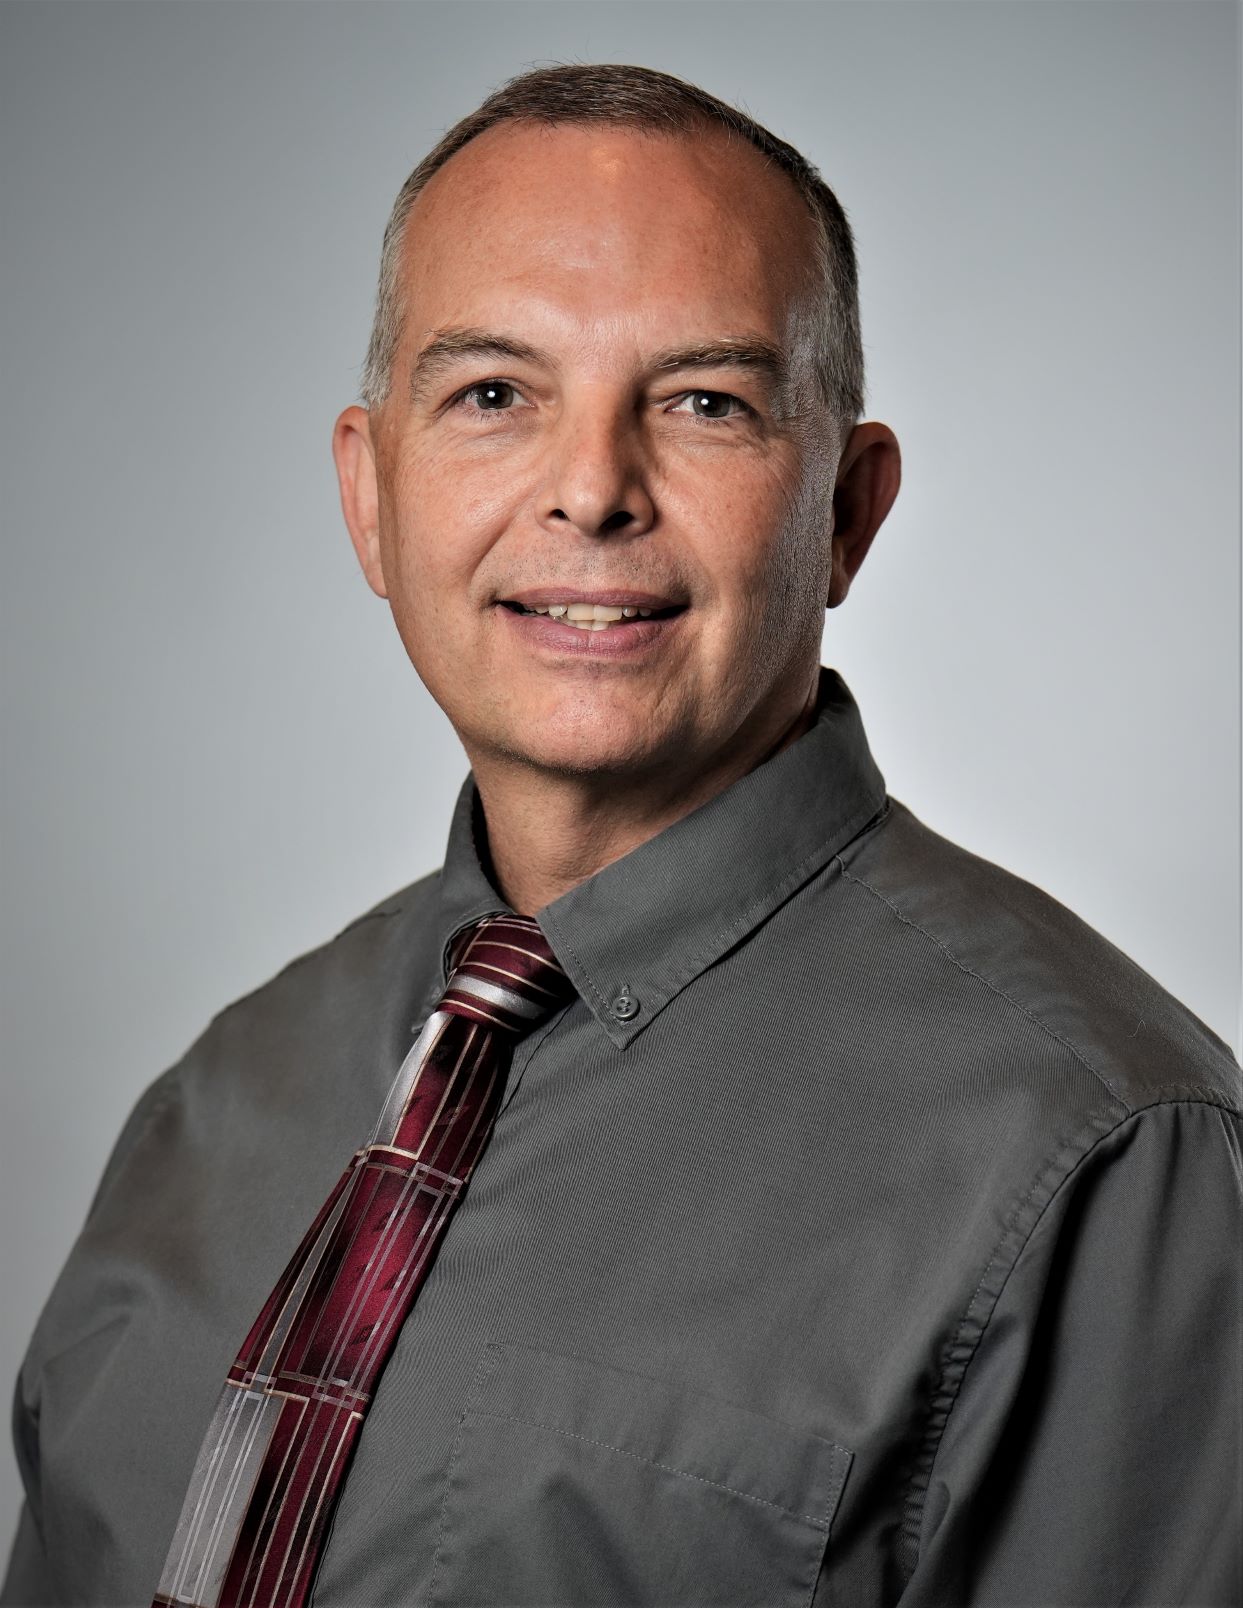 Paul Gerndt, Director of Information Technology